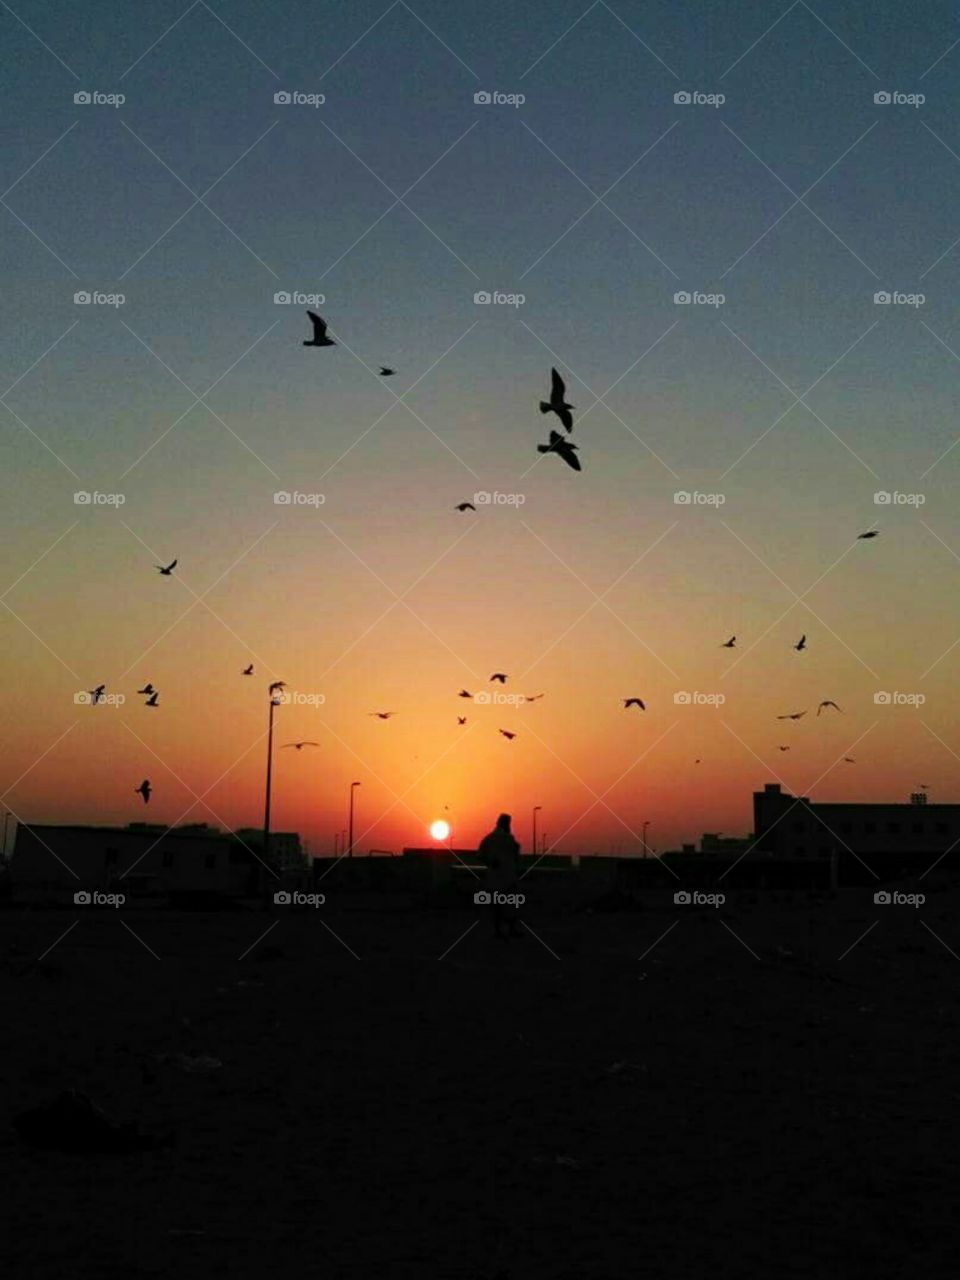 beautyfull sunset .. I take this image from Dubai alqse4.. own my mobile